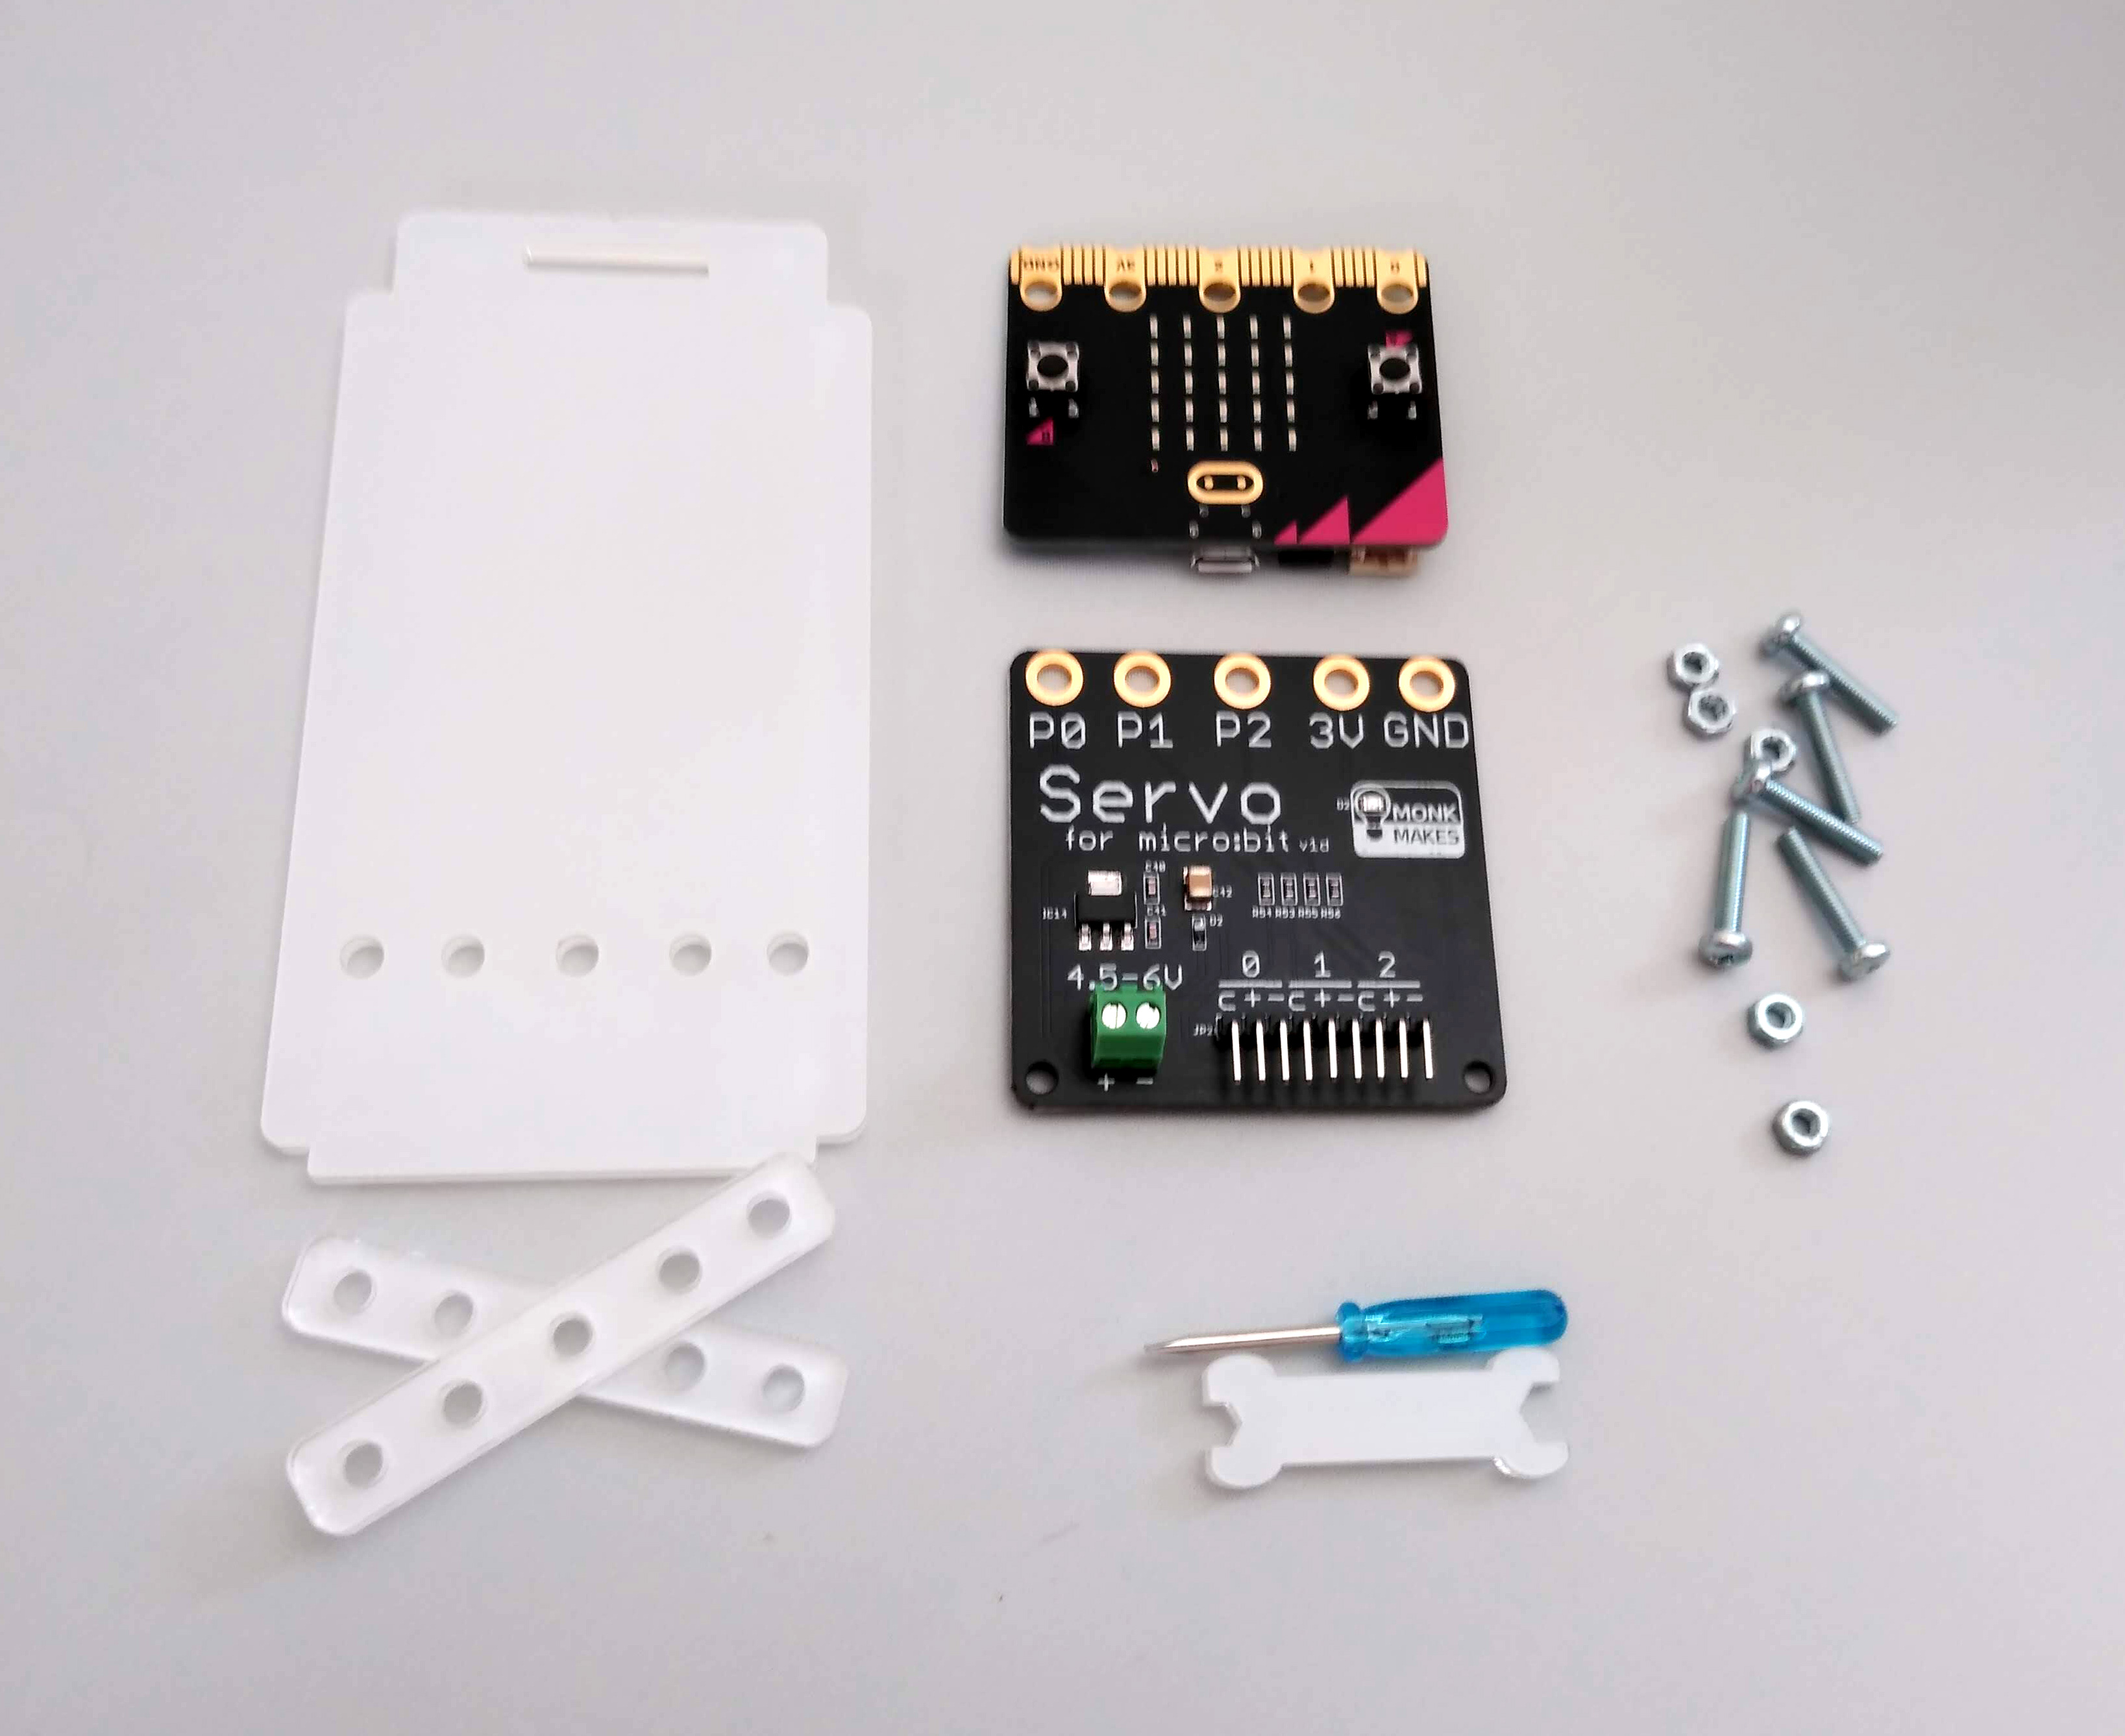 Monk Makes Electronics Kit 2 for micro:bit